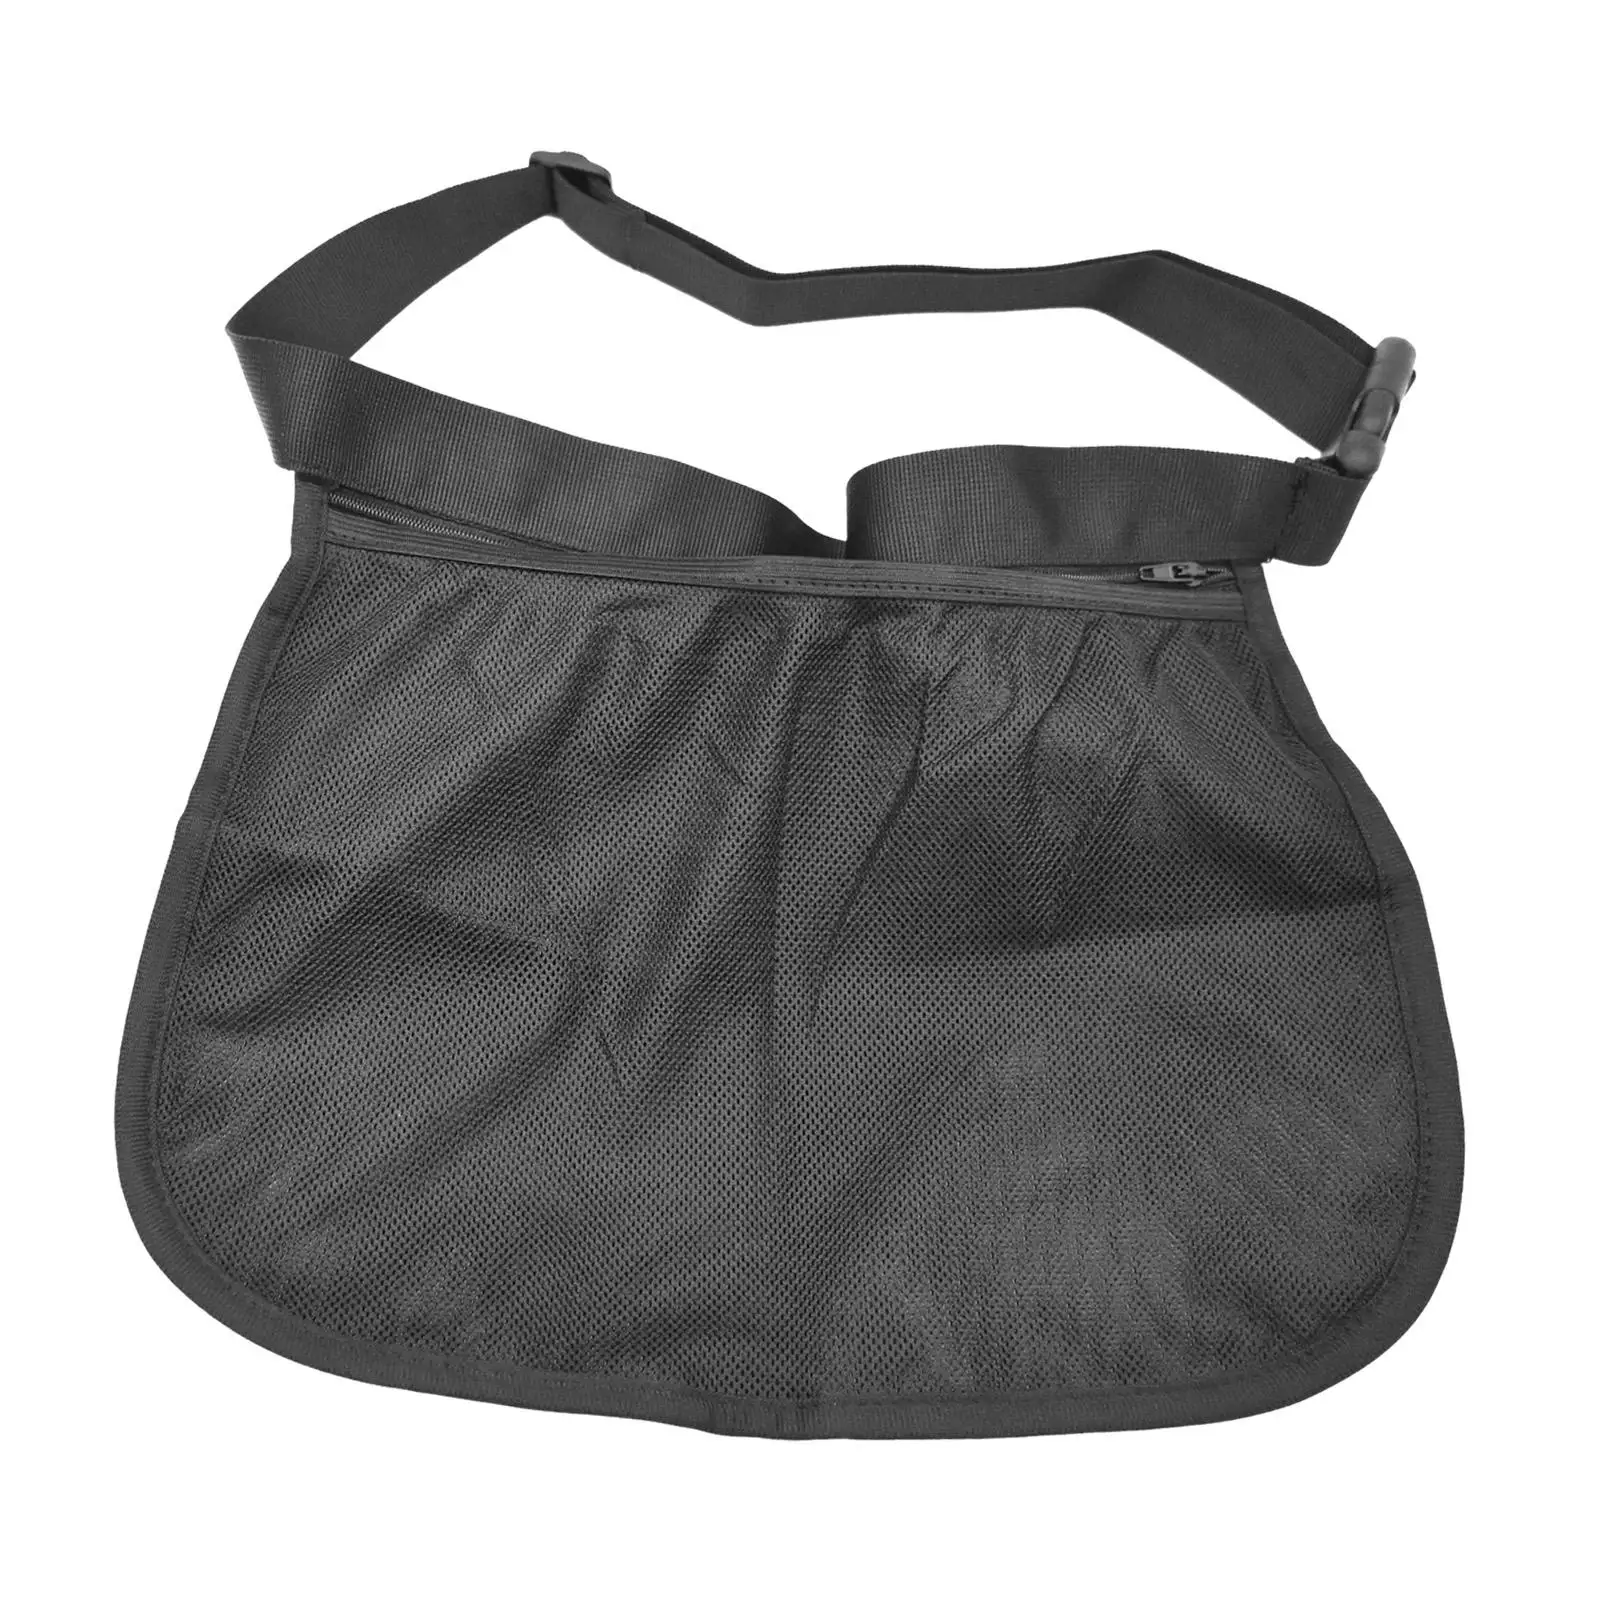 Black Tennis Ball Holder Waist Hip Bag Outdoor Ball Storage Bag for Fitness Workout Exercise Storing Balls and Phones Women Men